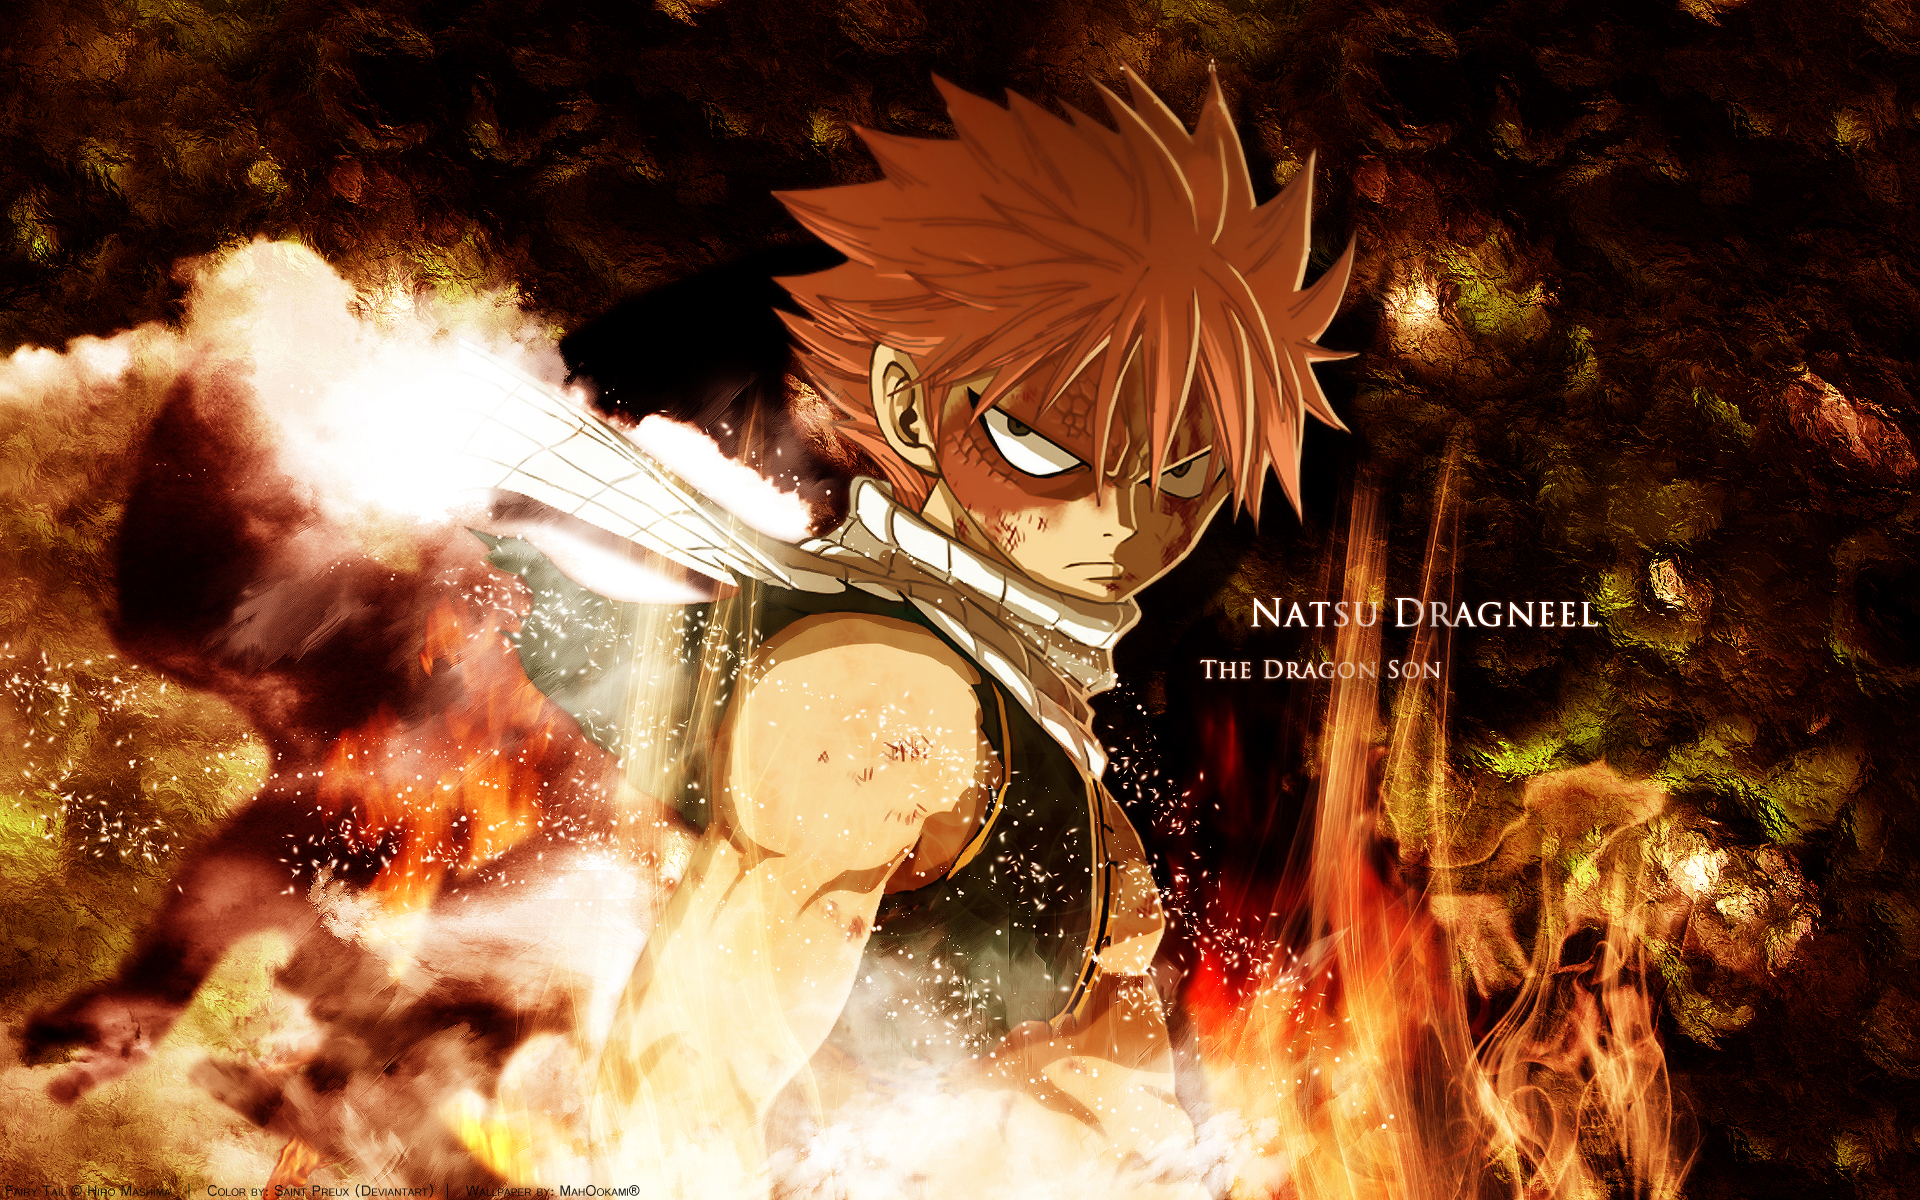 Natsu Dragneel from Fairy Tail, a fierce warrior engulfed in fire.